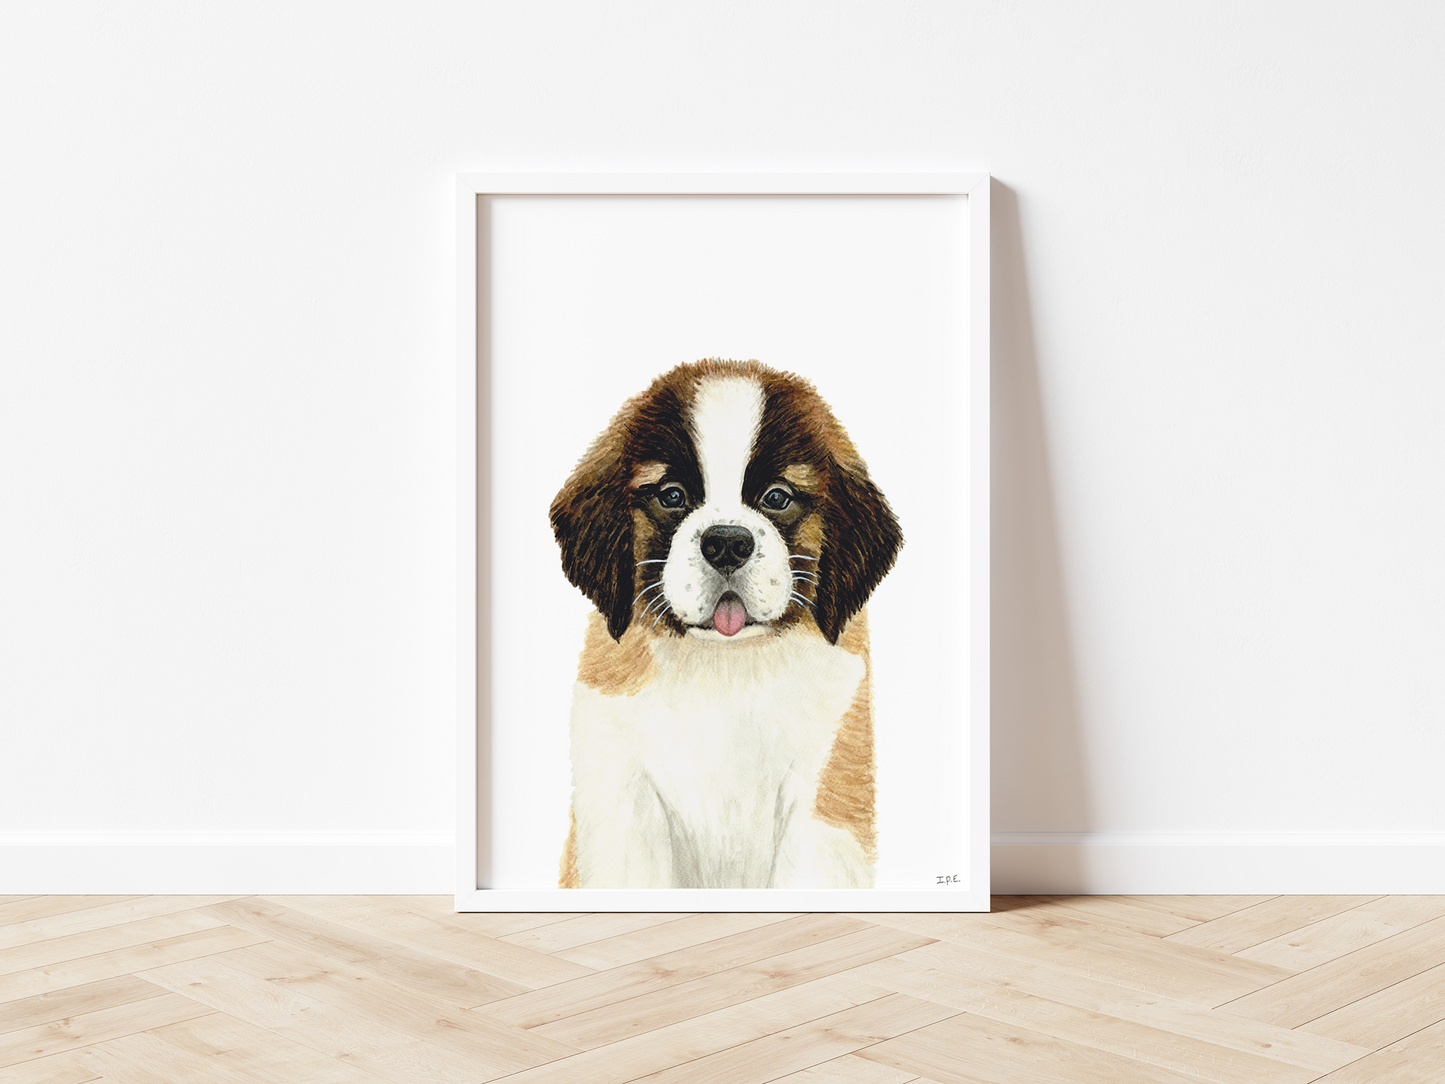 Saint Bernard dog, framed and on wooden floor